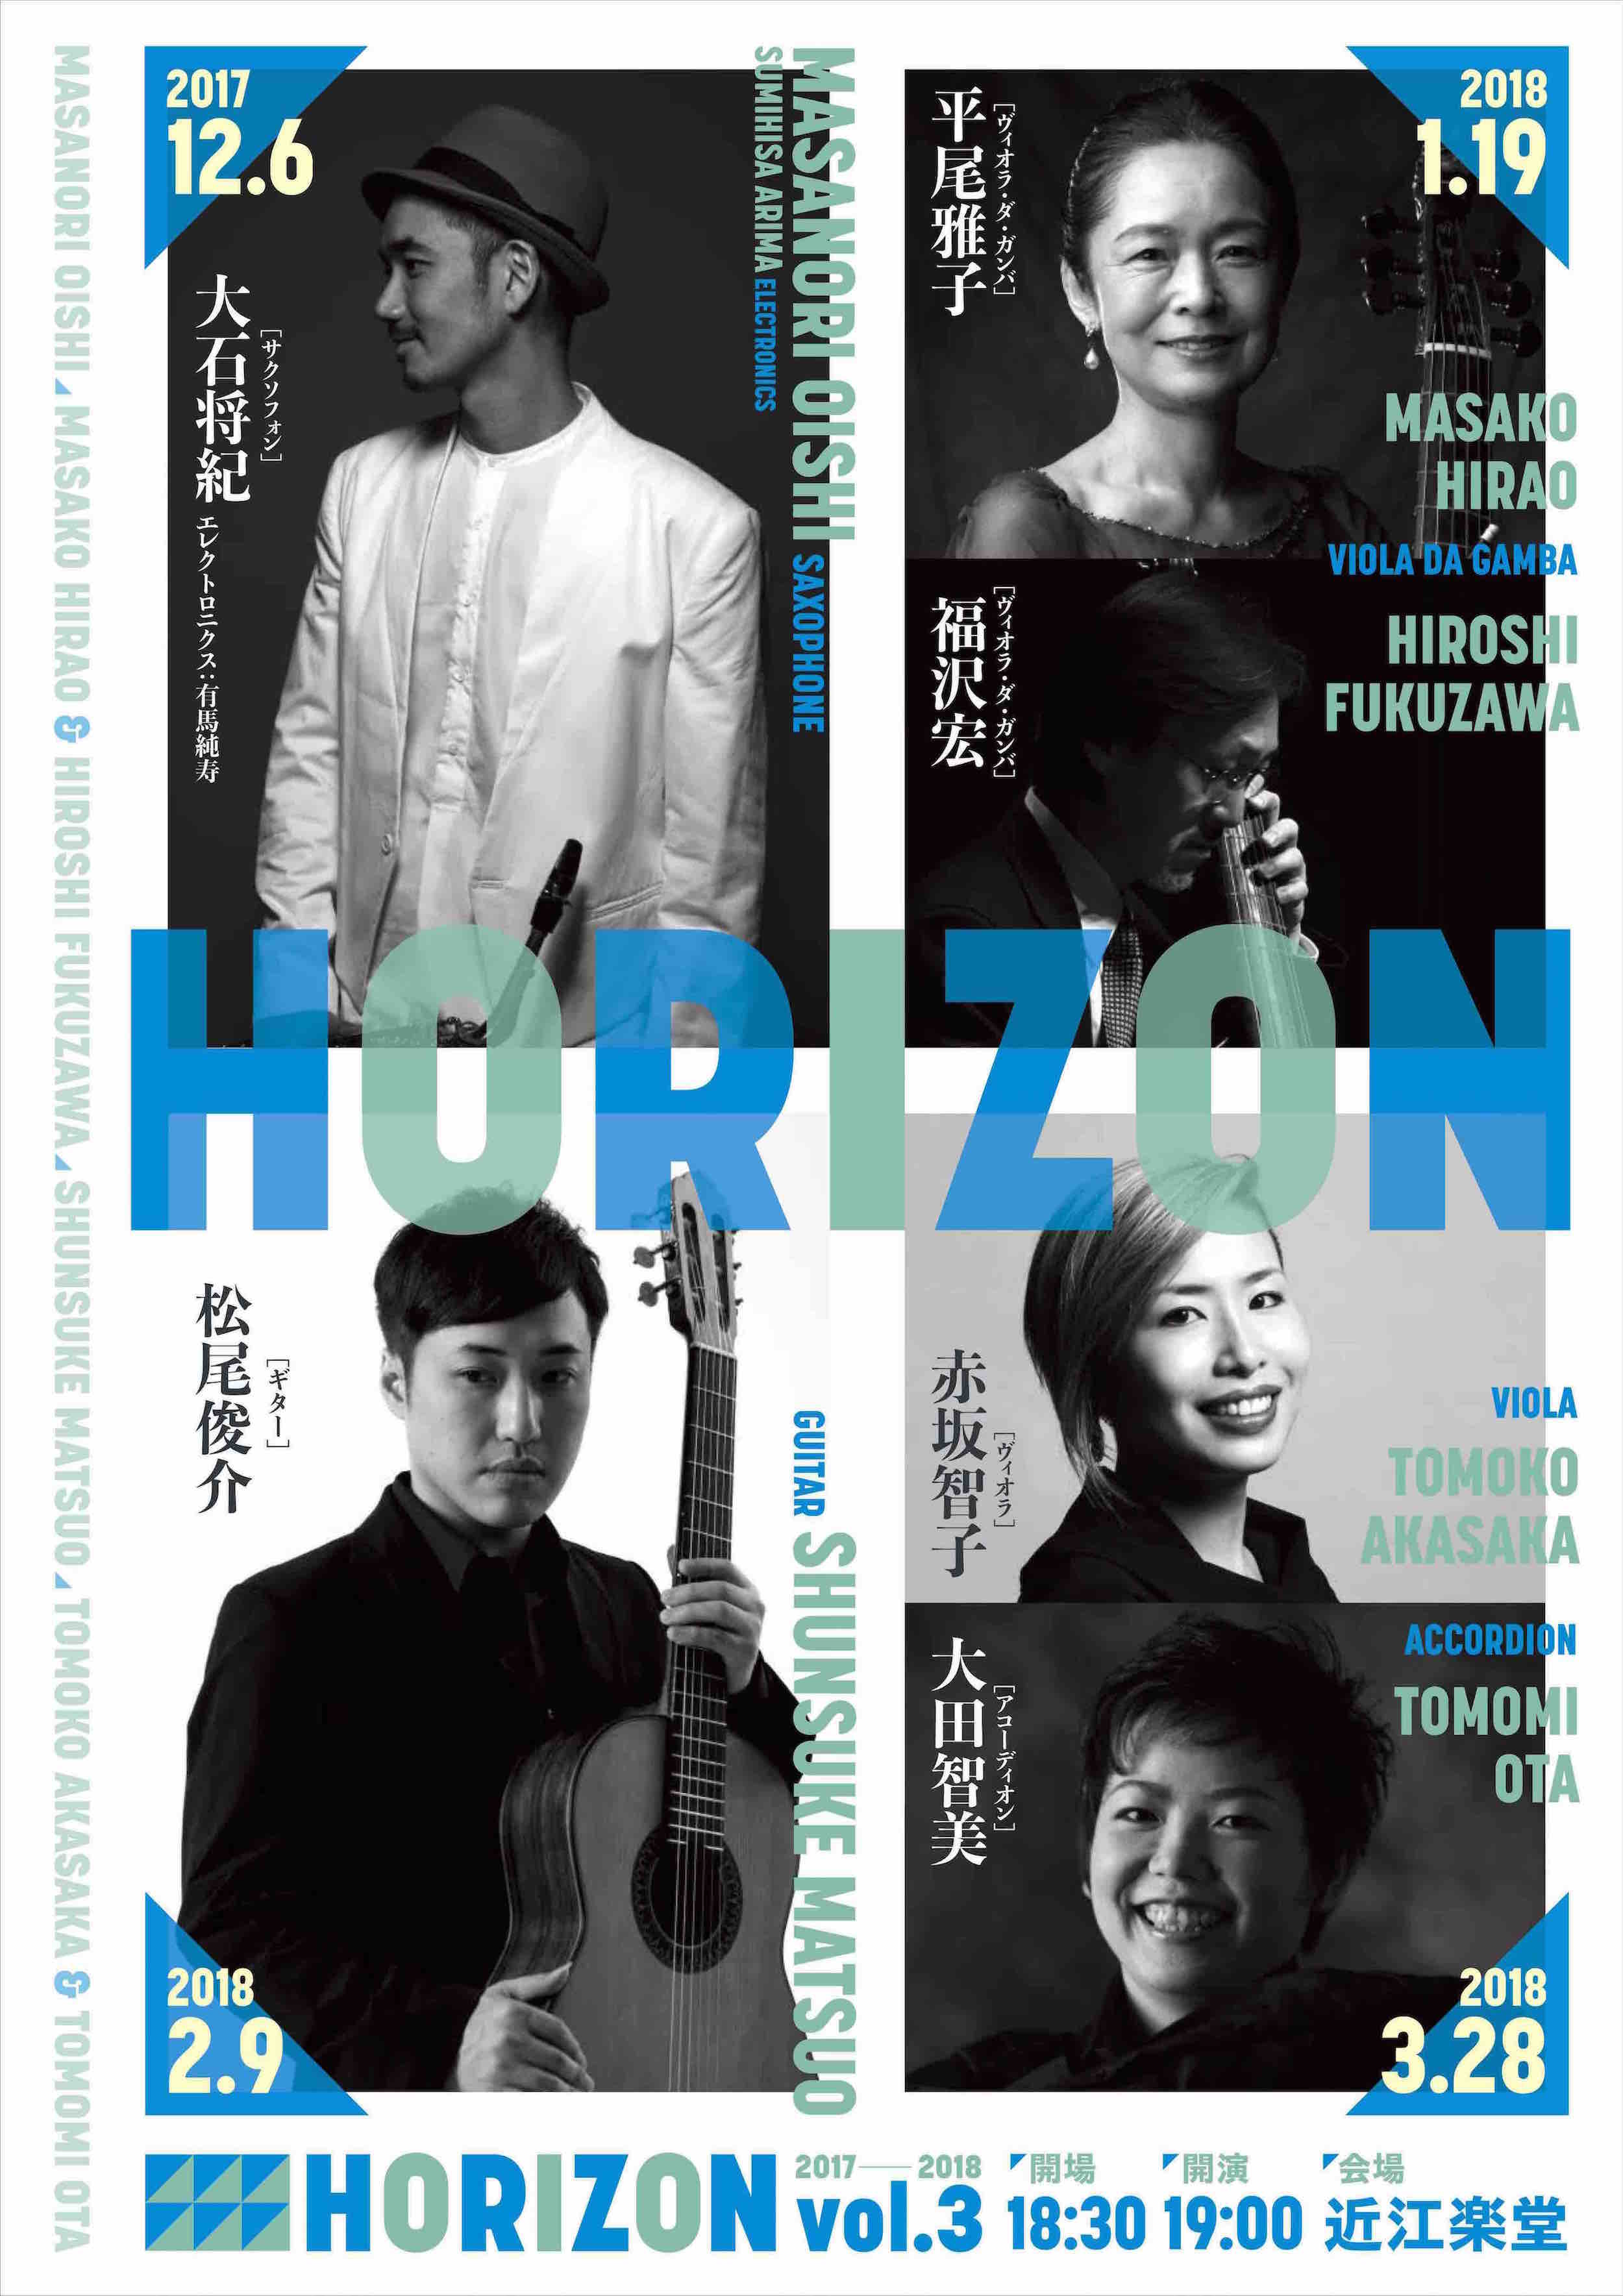 HORIZON vol.3 大石将紀Ticking time